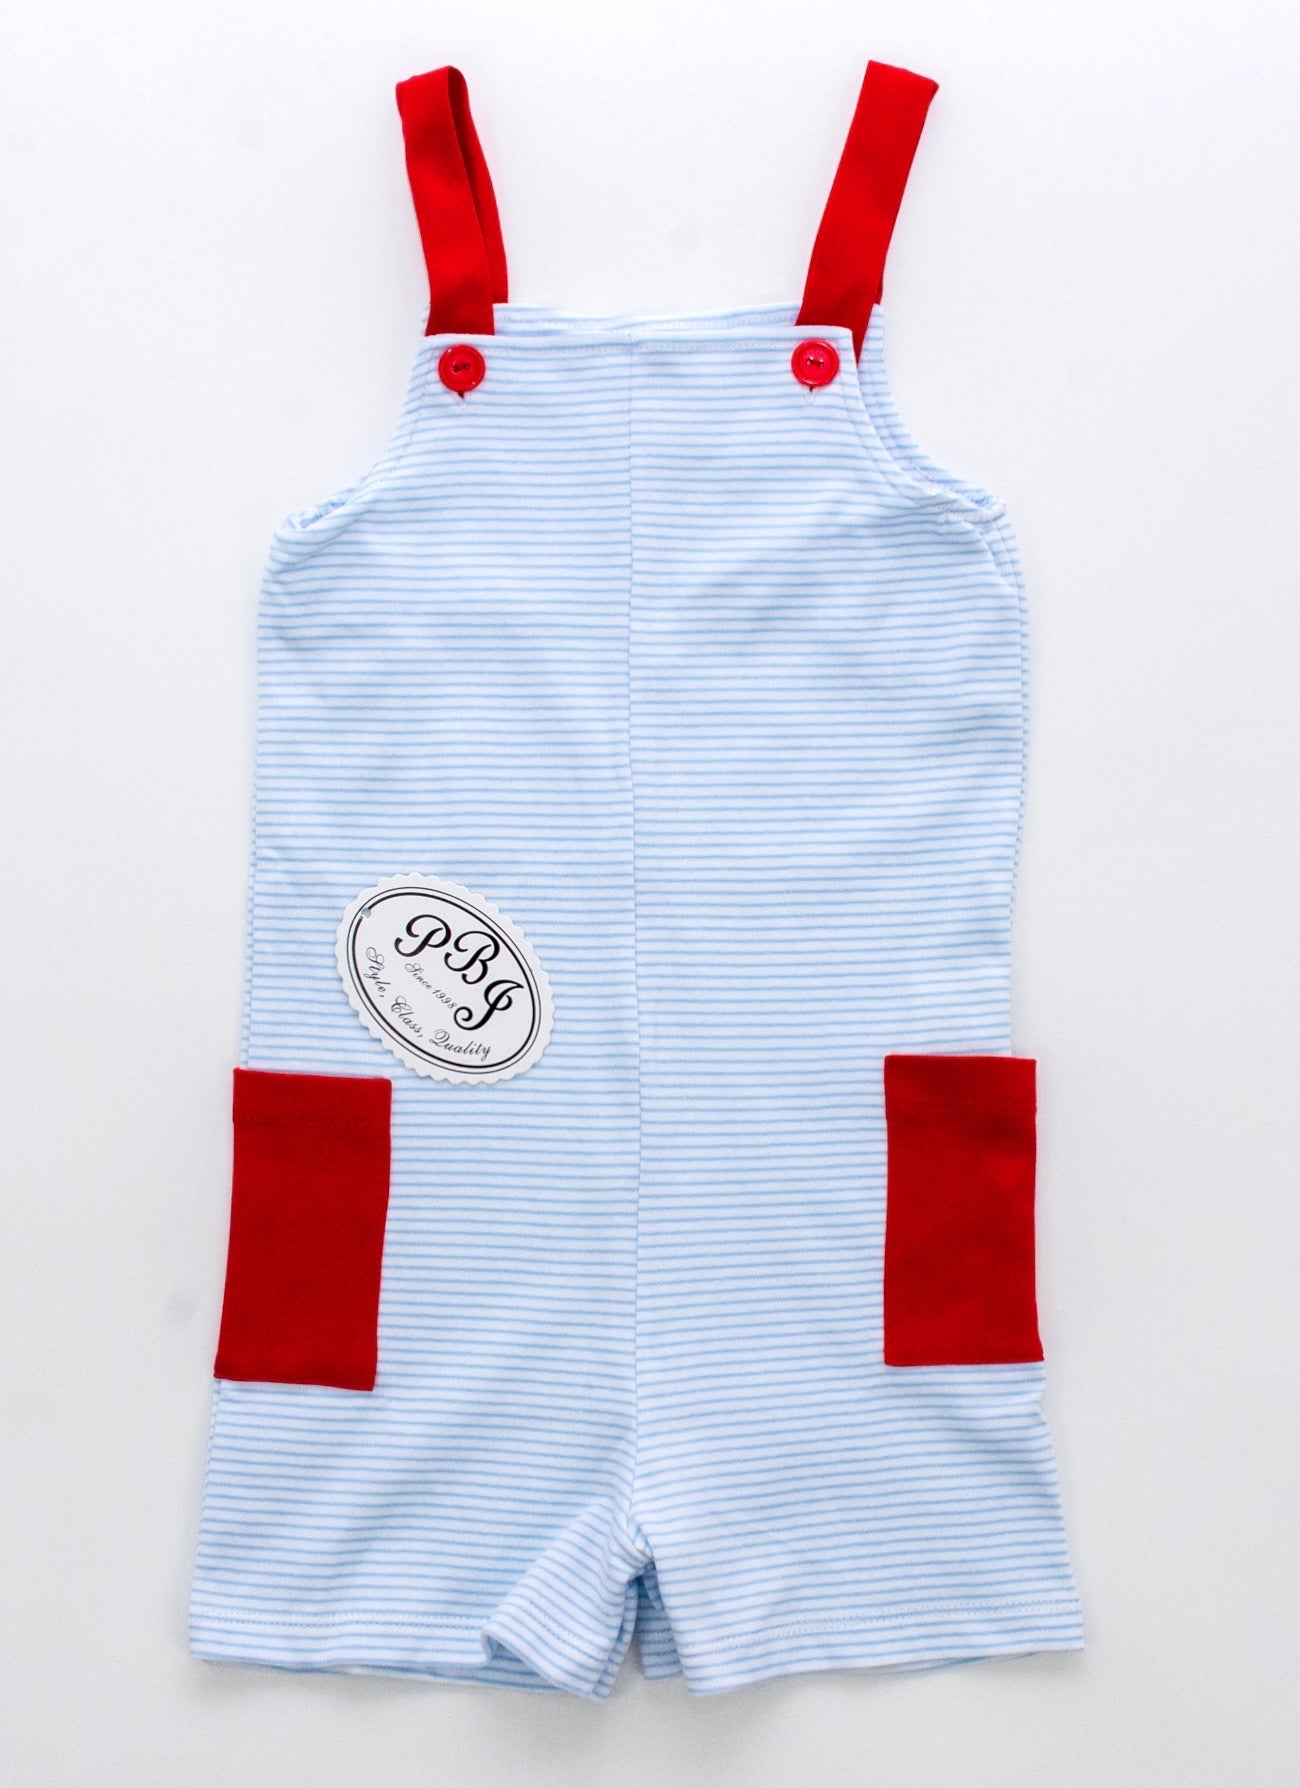 Pima Harry sunsuit w/ pockets - blue stripes/ red